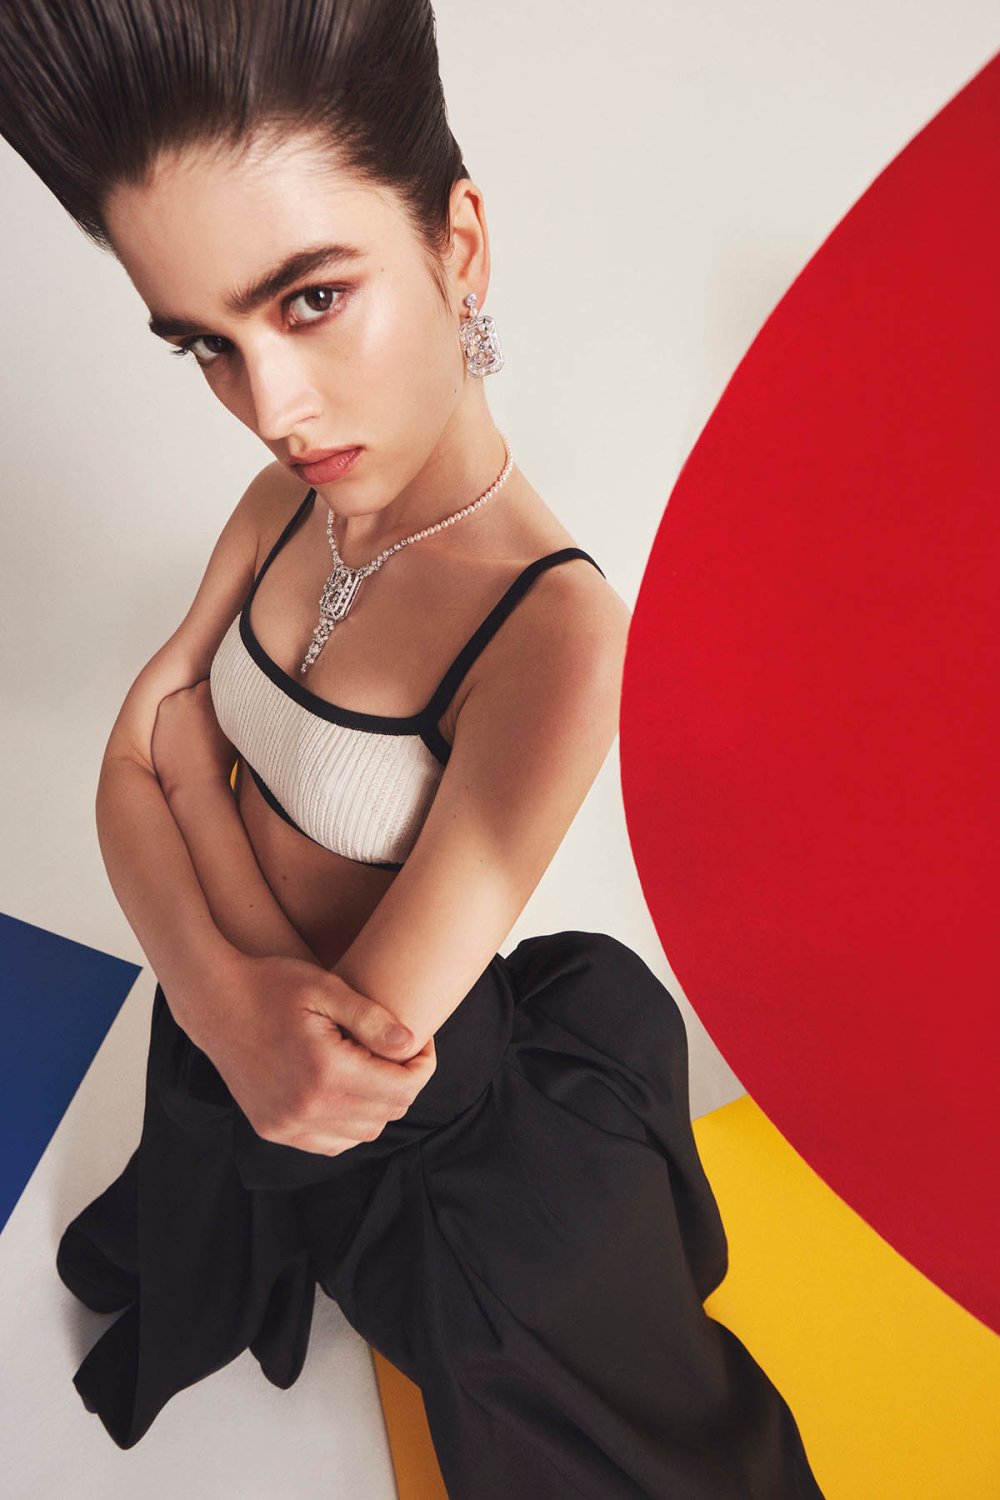 Alexandra-Micu-covers-Vogue-Taiwan-May-2021-by-Julien-Vallon-18.jpg